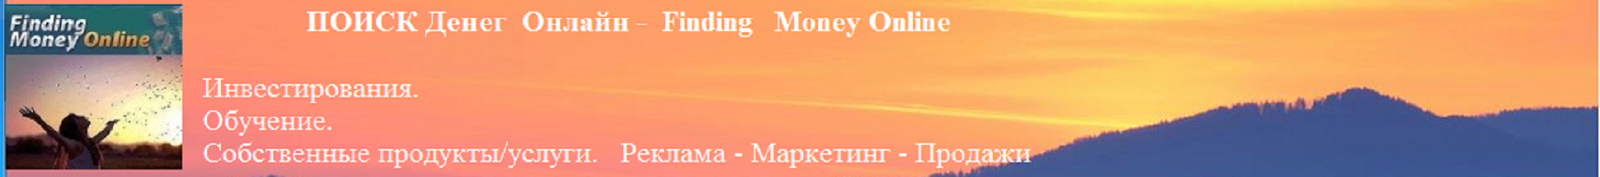 Поиск денег онлайн - Finding Money Online